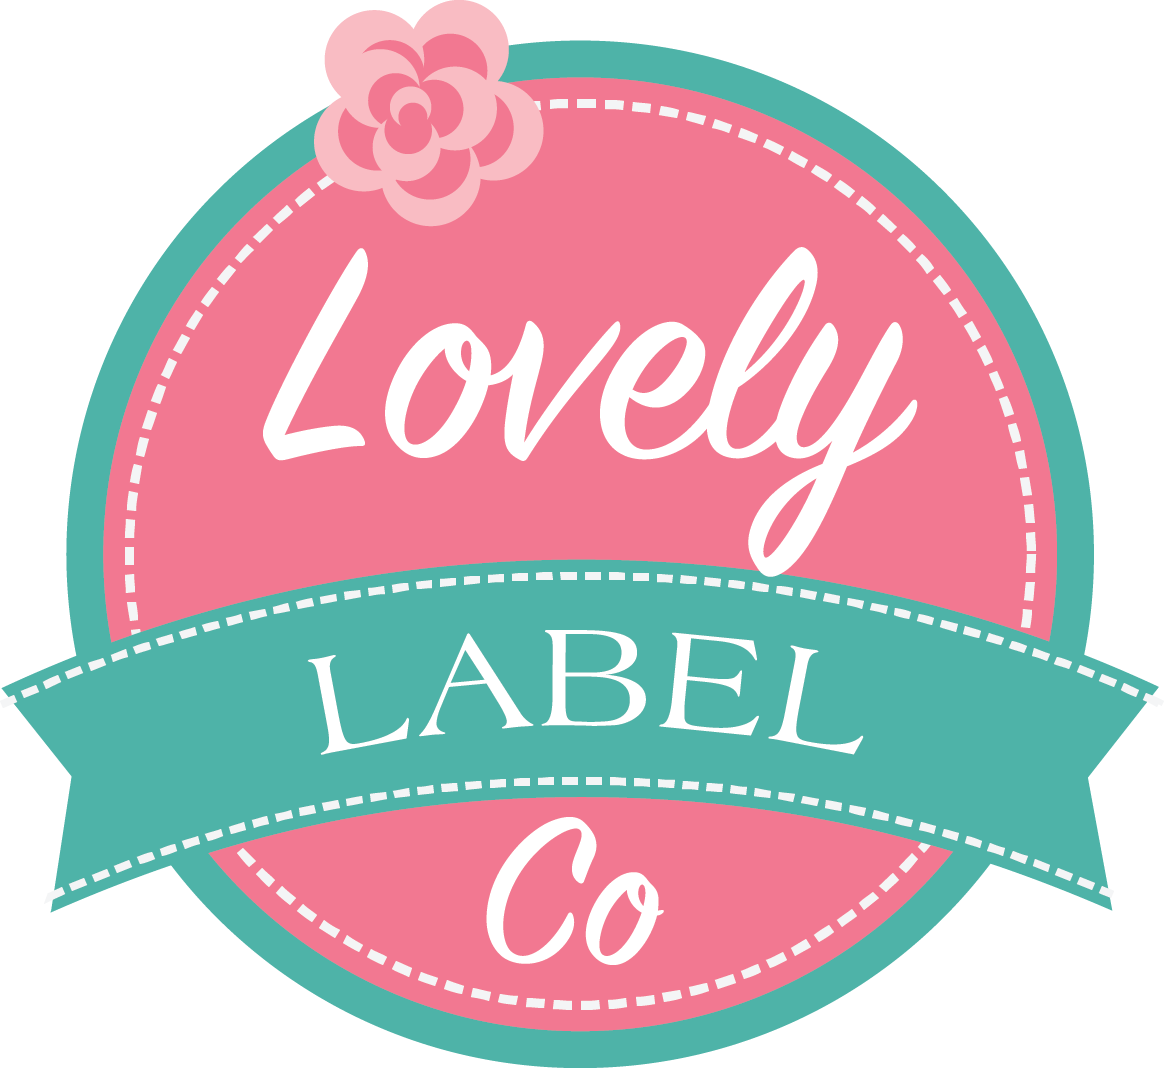 Lovely Label Co